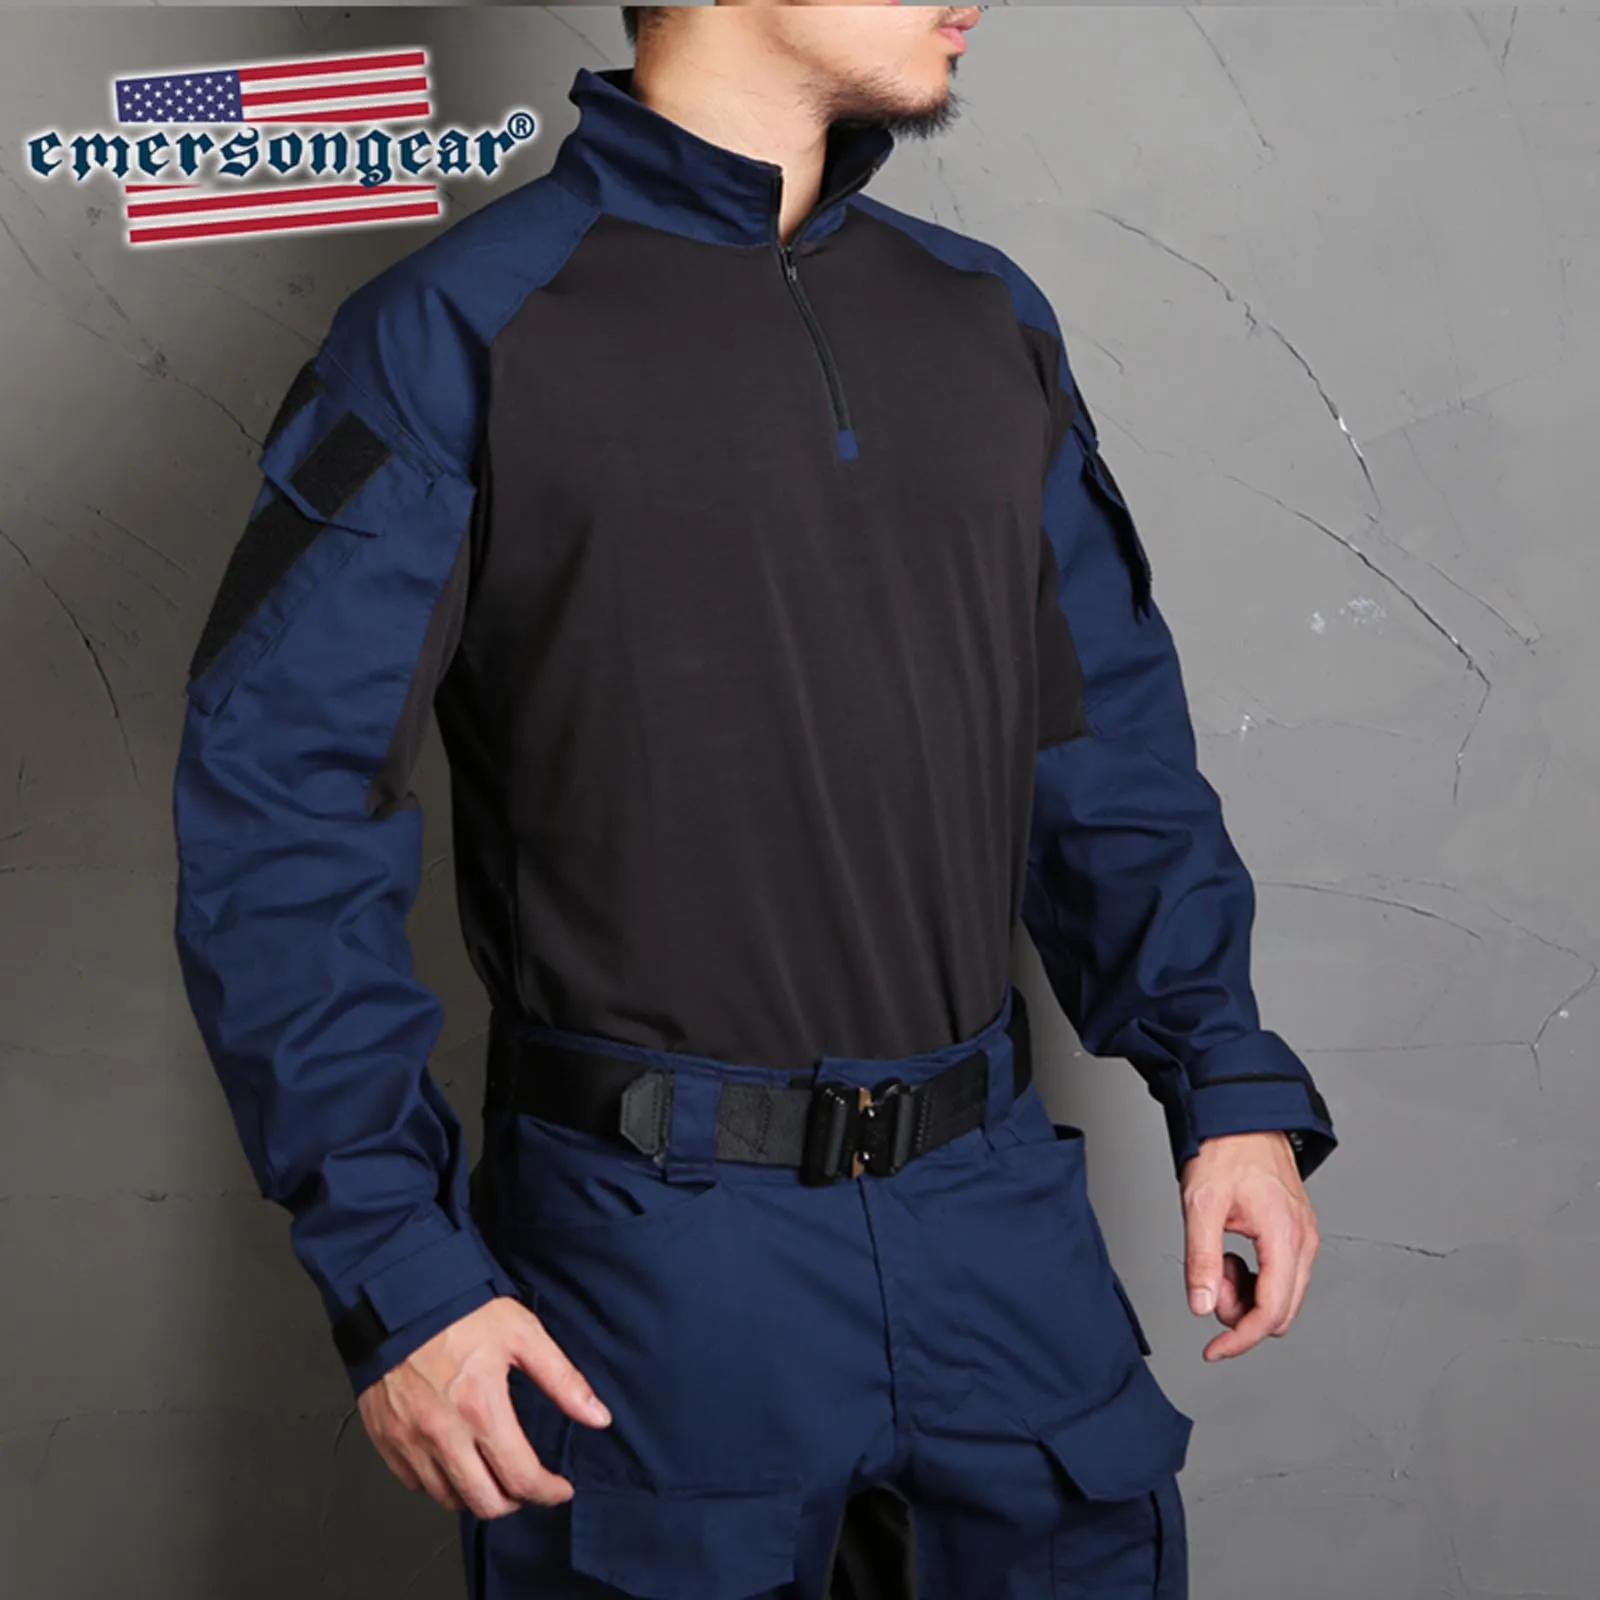 Emersongear Gen3 Tactical Combat Shirt Navy Blue Tactical Shirt EMB9421